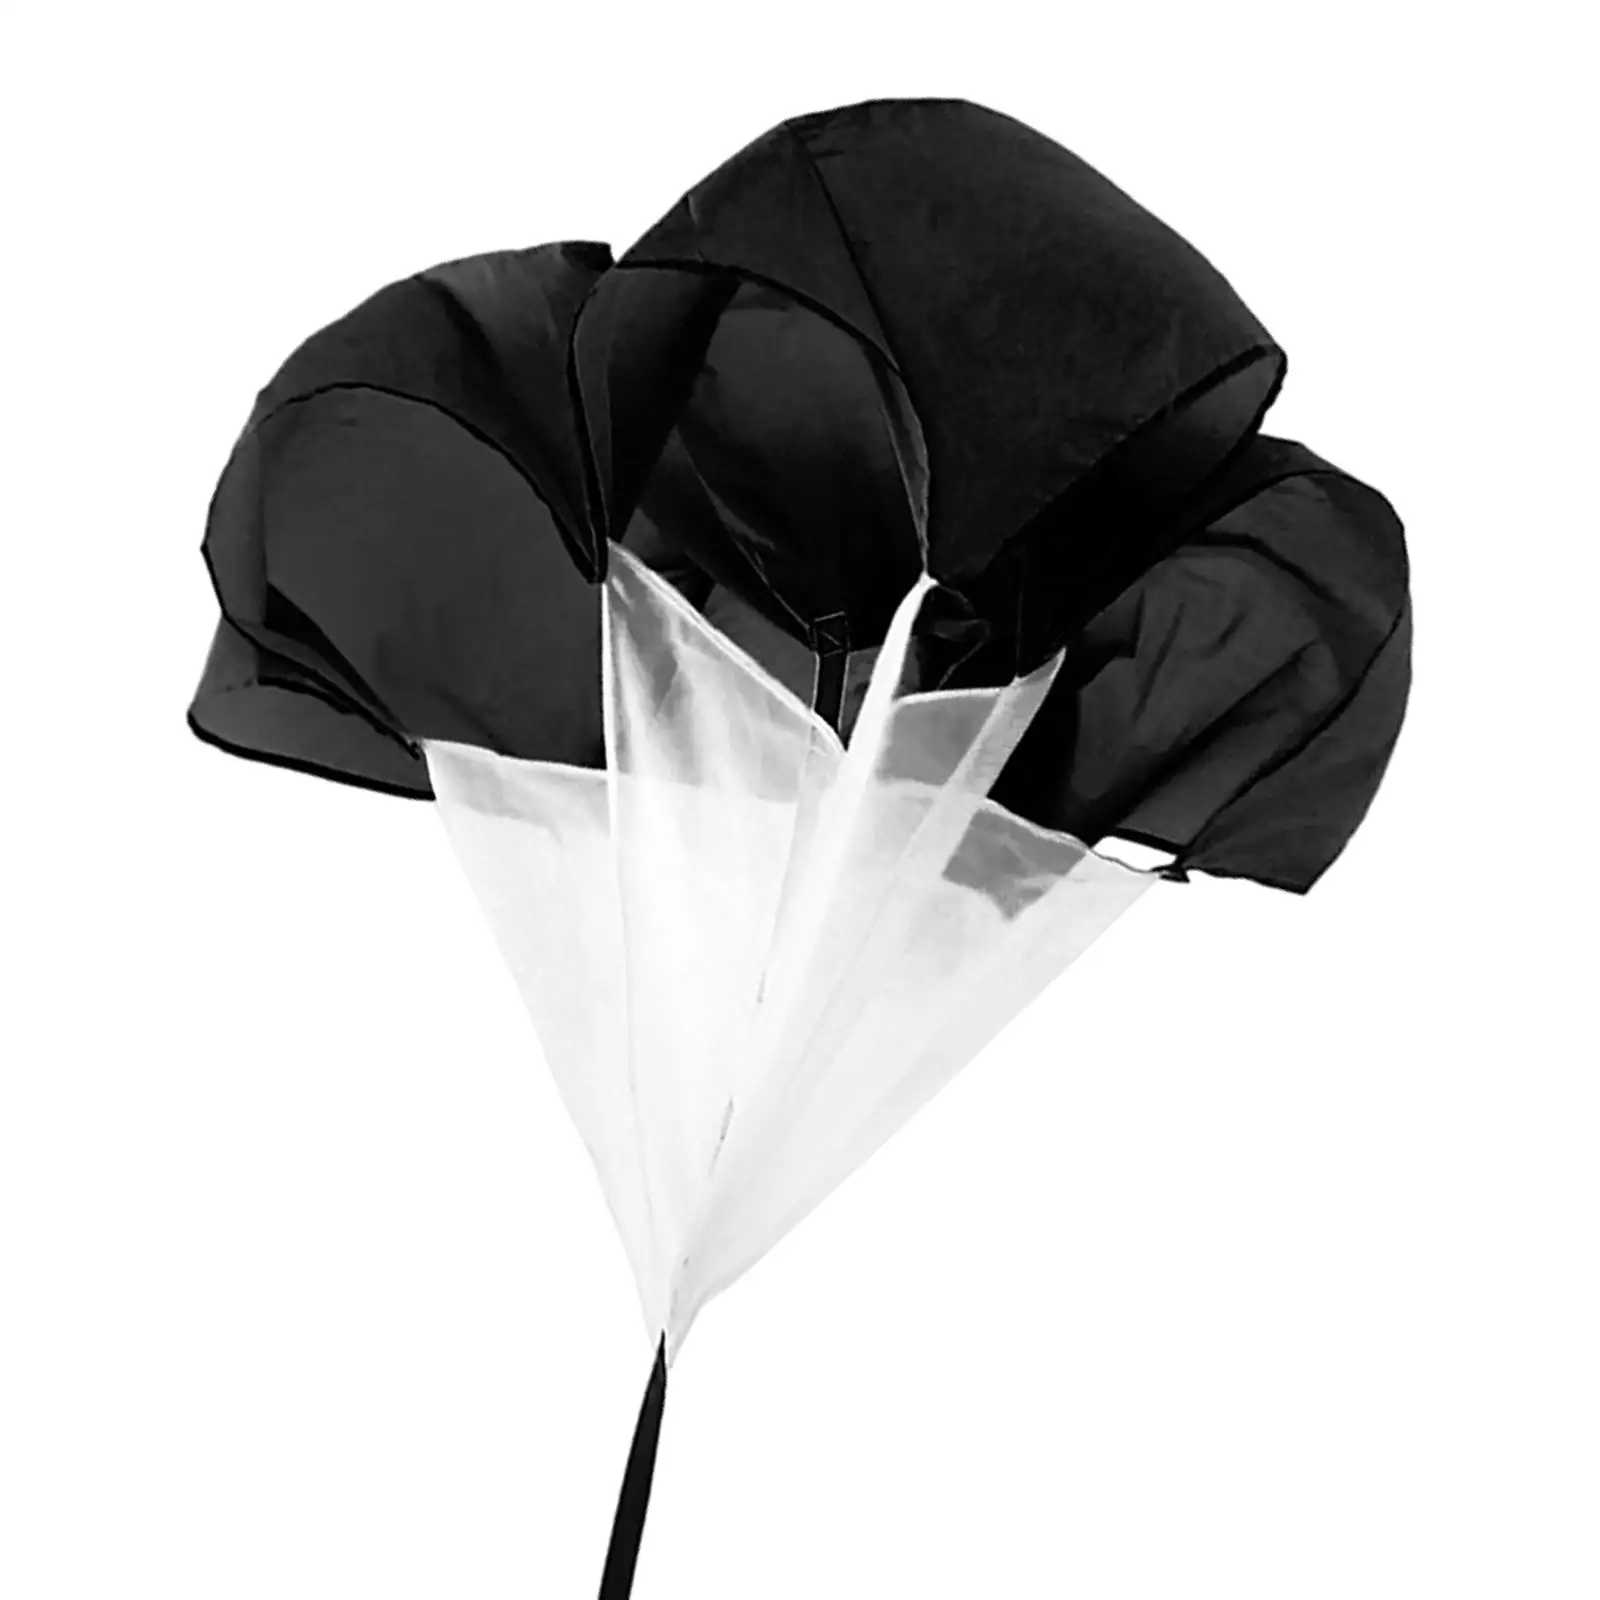 Training Resistance Parachute Running Physical Drag Umbrella for Football